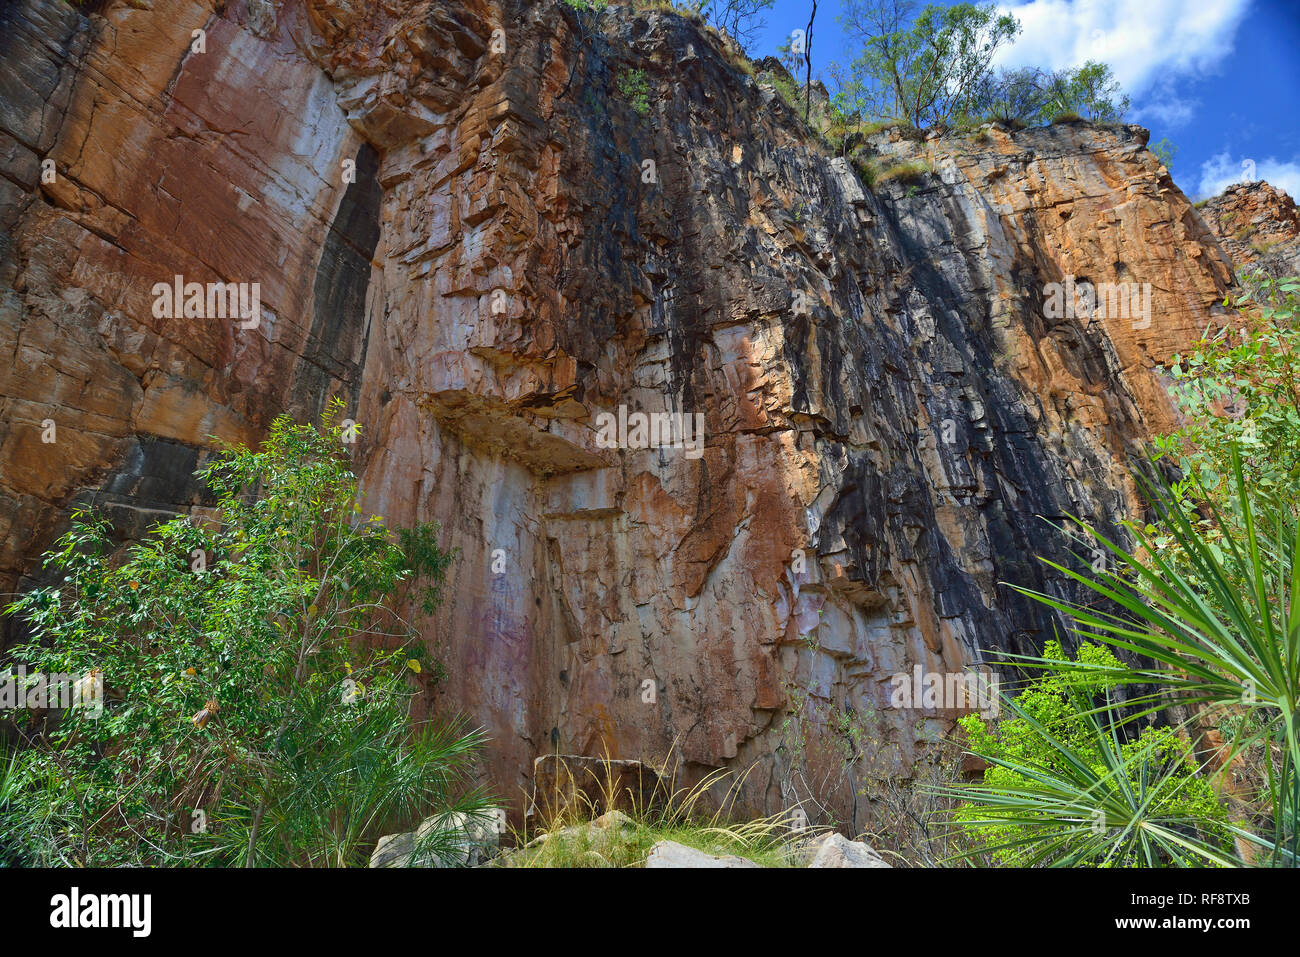 Katherine Gorge, Nitmiluk National Park, Nr. Katherine where the Katherine River runs through 13 sandstone gorges, Northern Territory,Australia Stock Photo